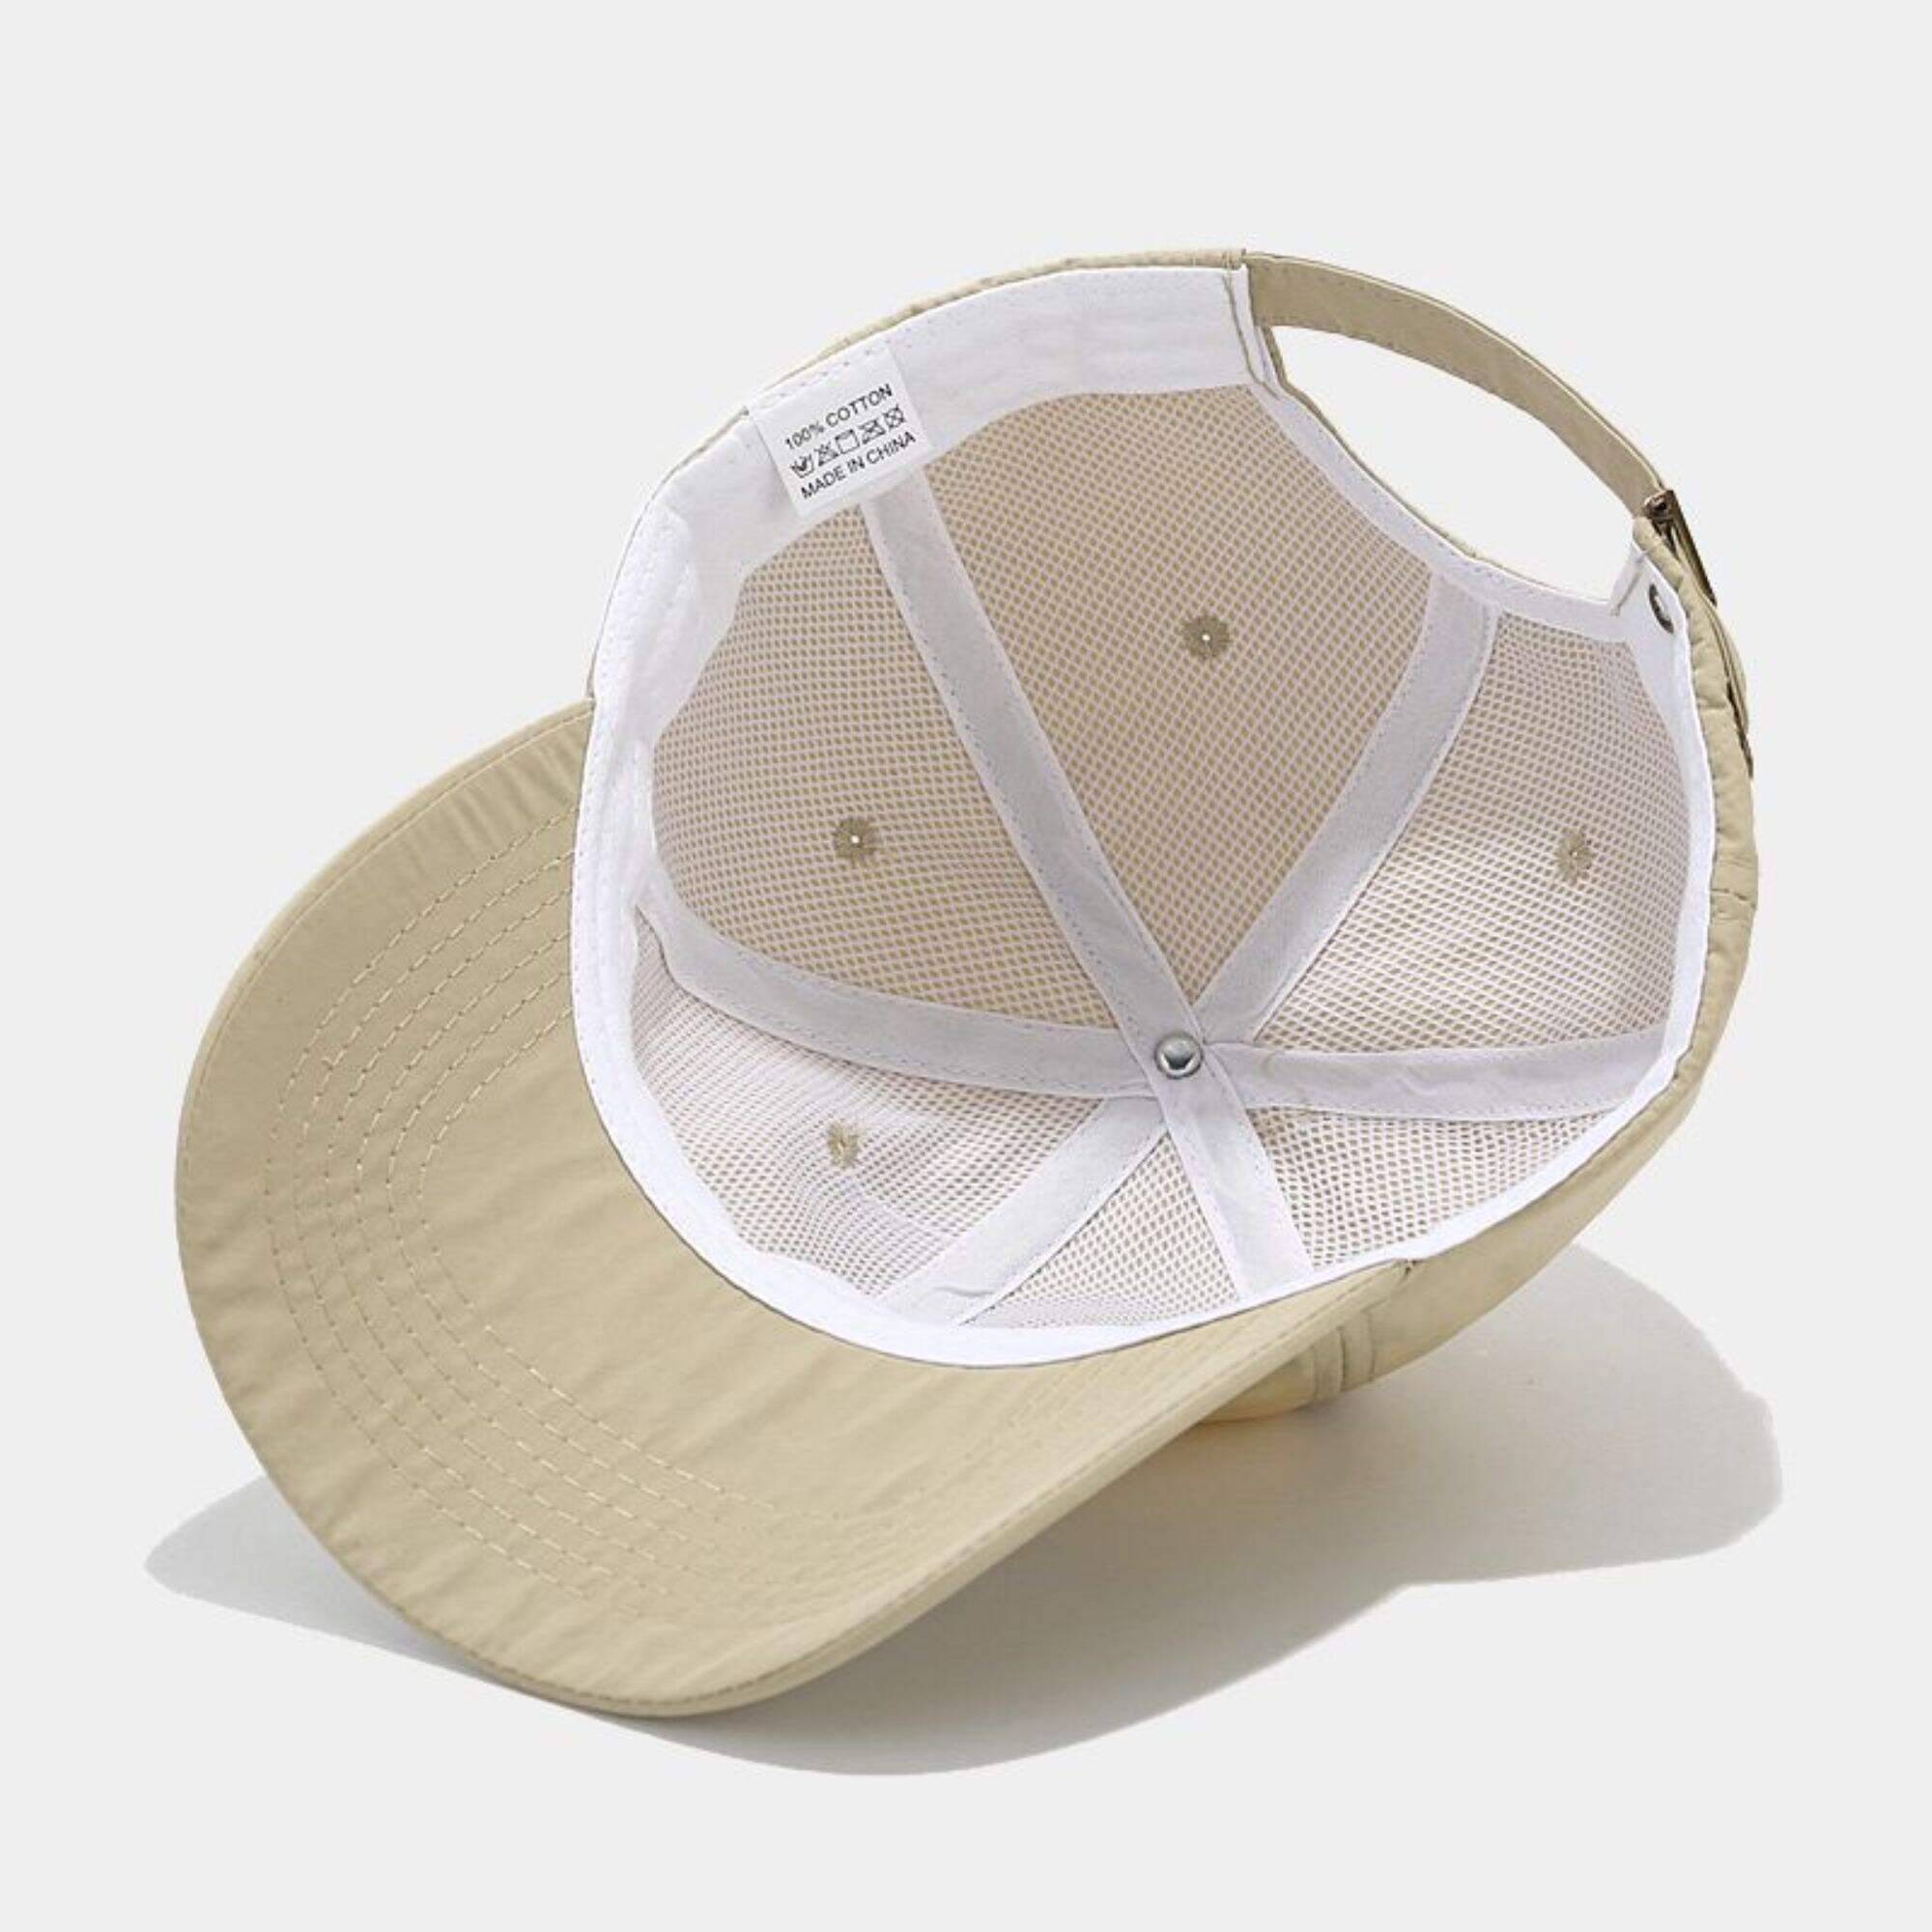 waterproof baseball hats for men